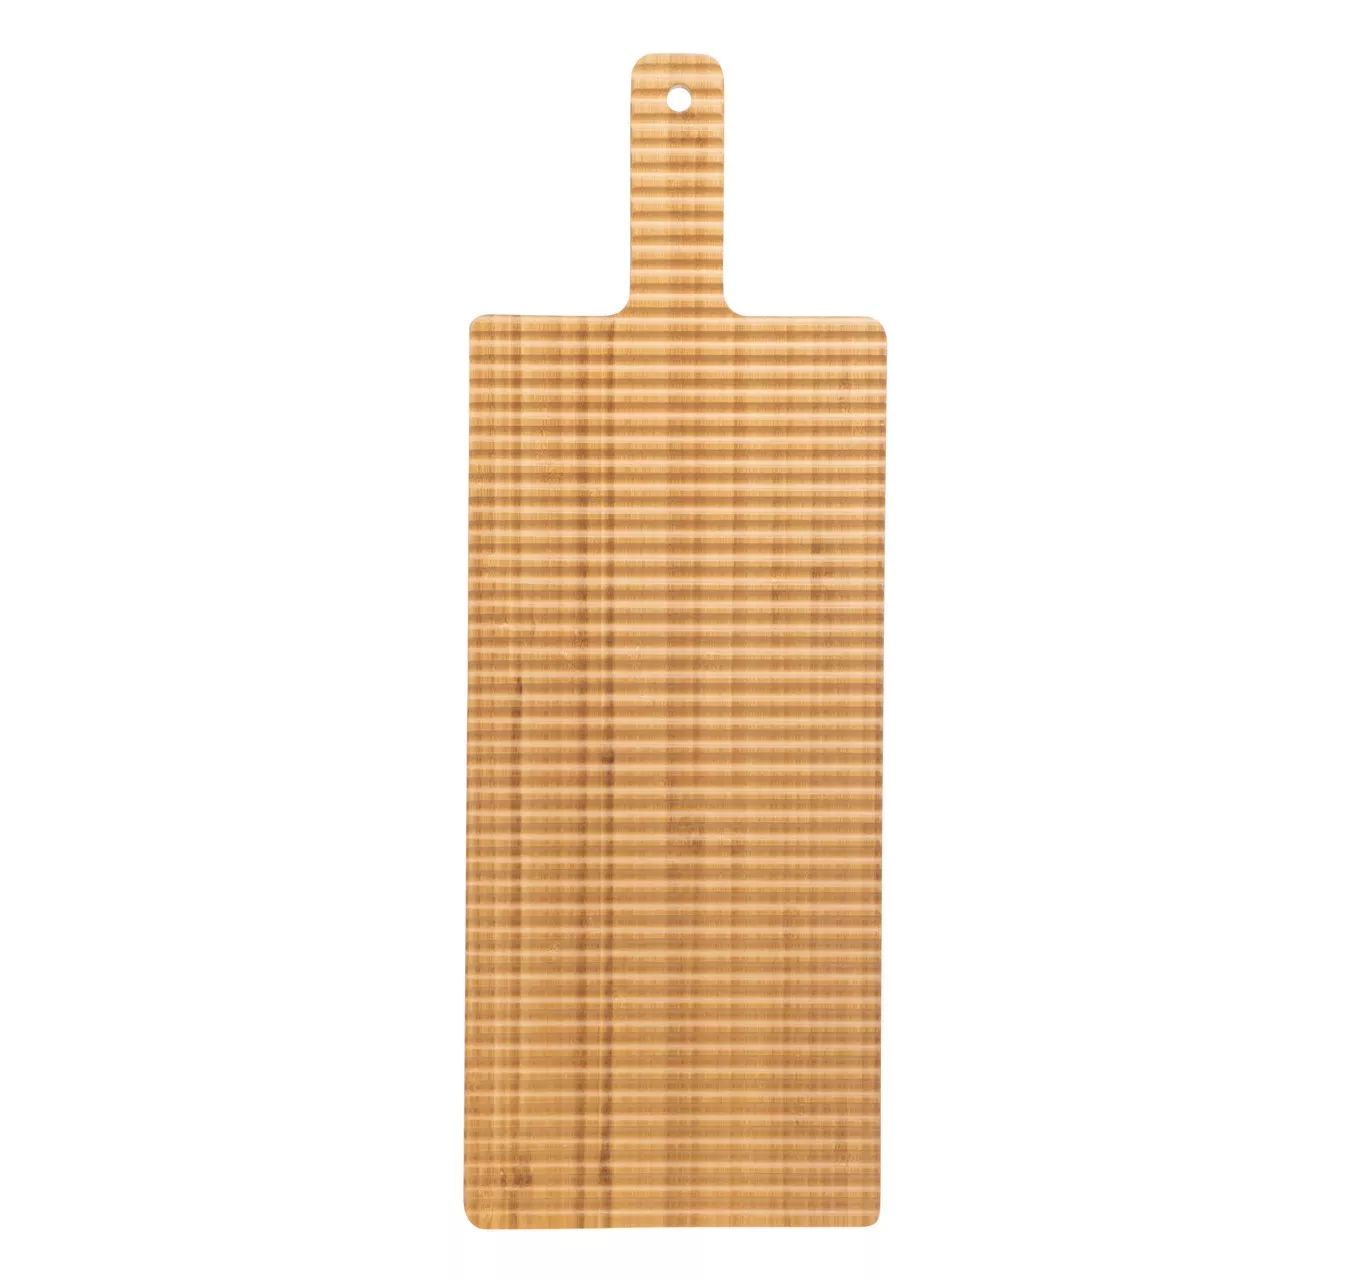 Bamboo Paddle Board